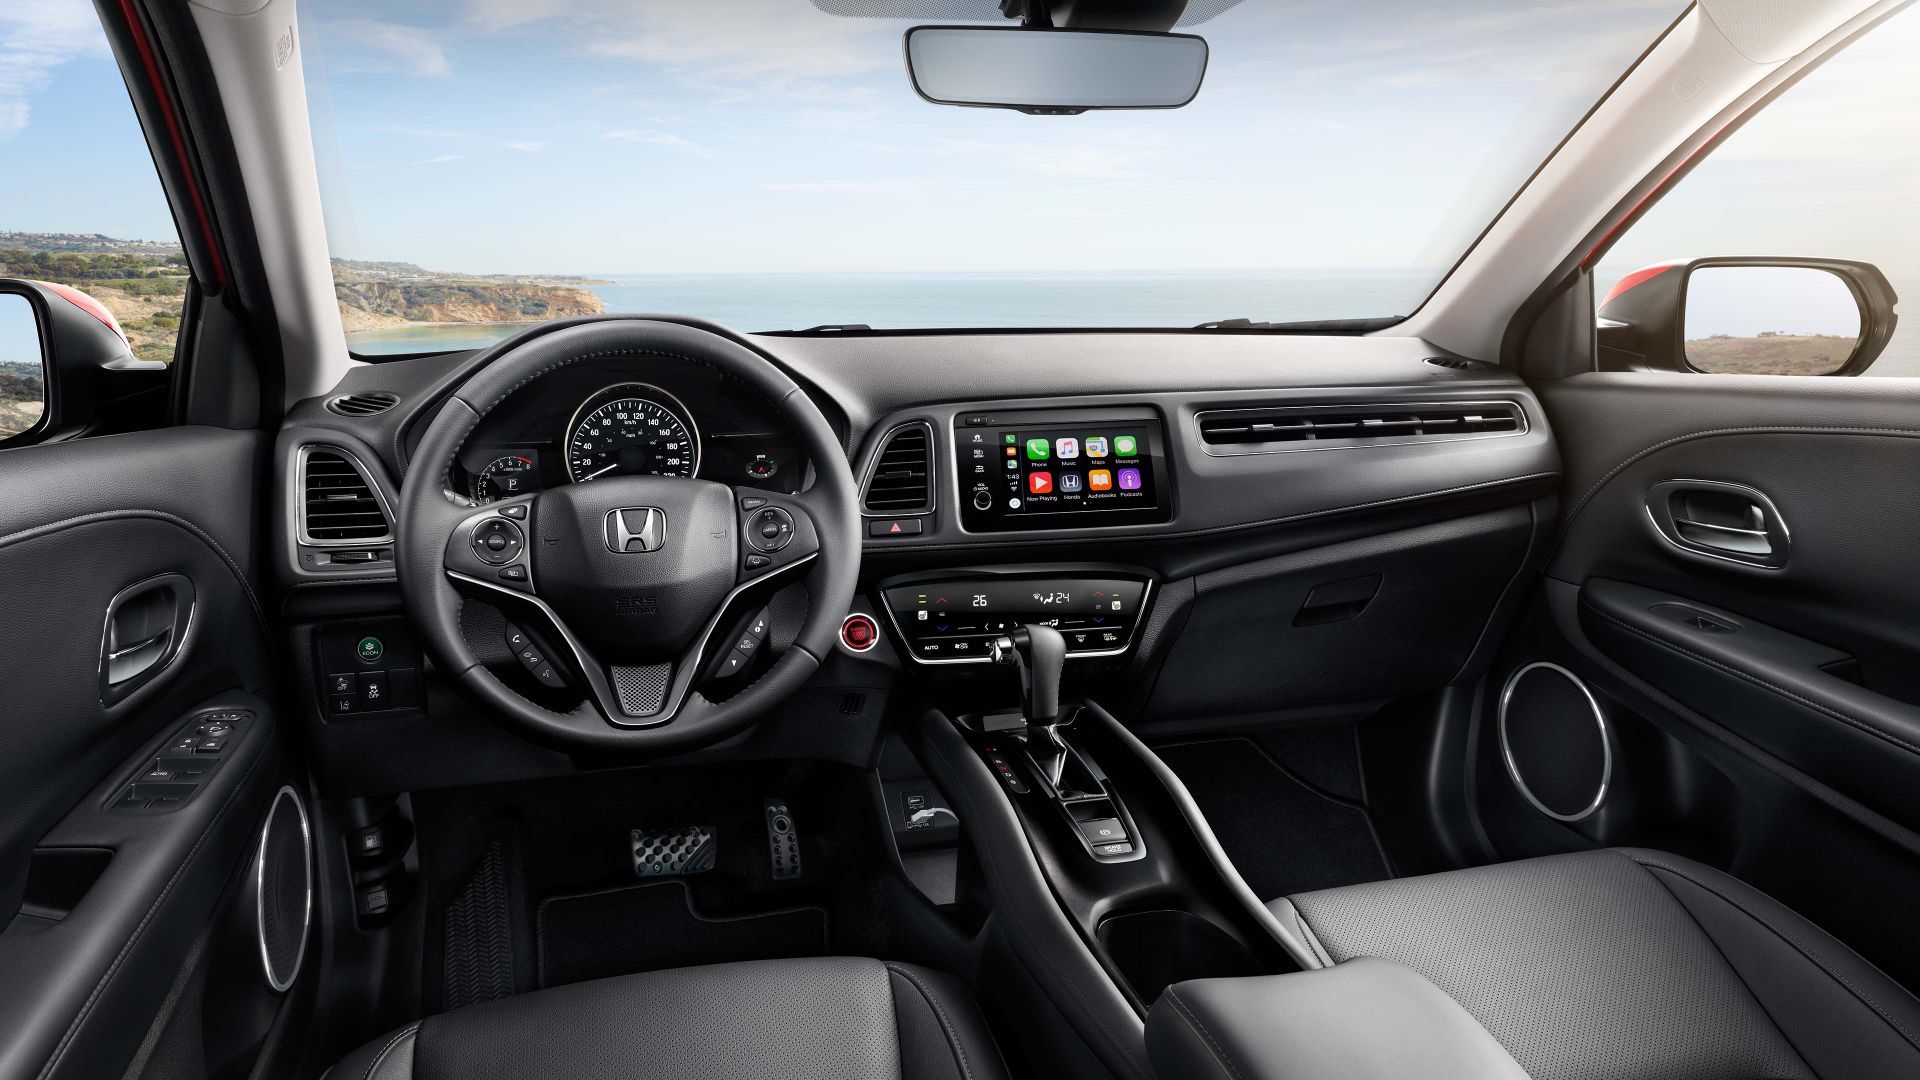 The 2019 Honda HR-V interior